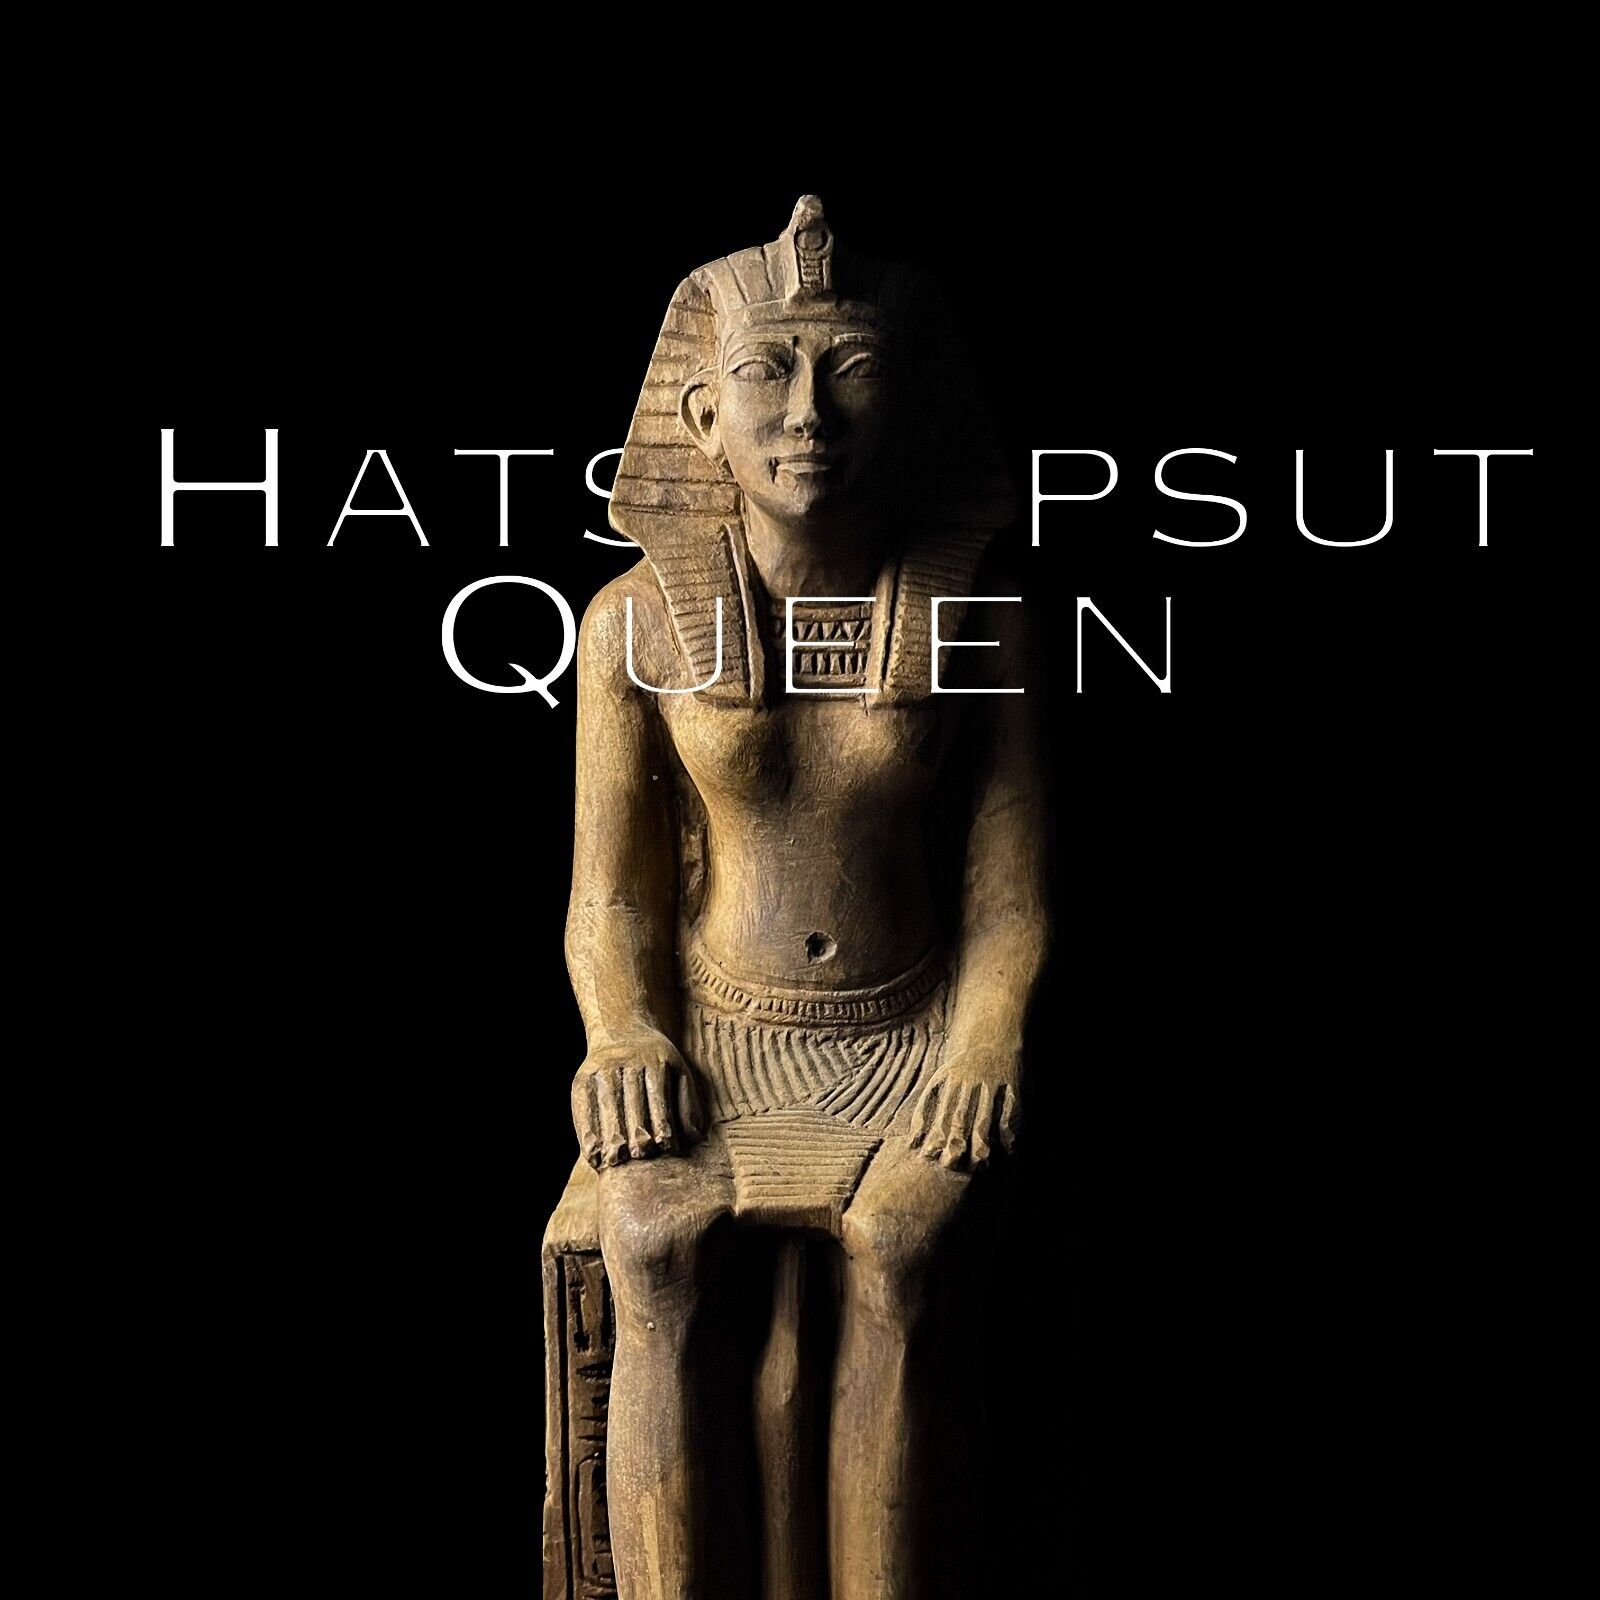 Egyptian Queen Hatshepsut statue, Museum statue for Hatshepsut, old art